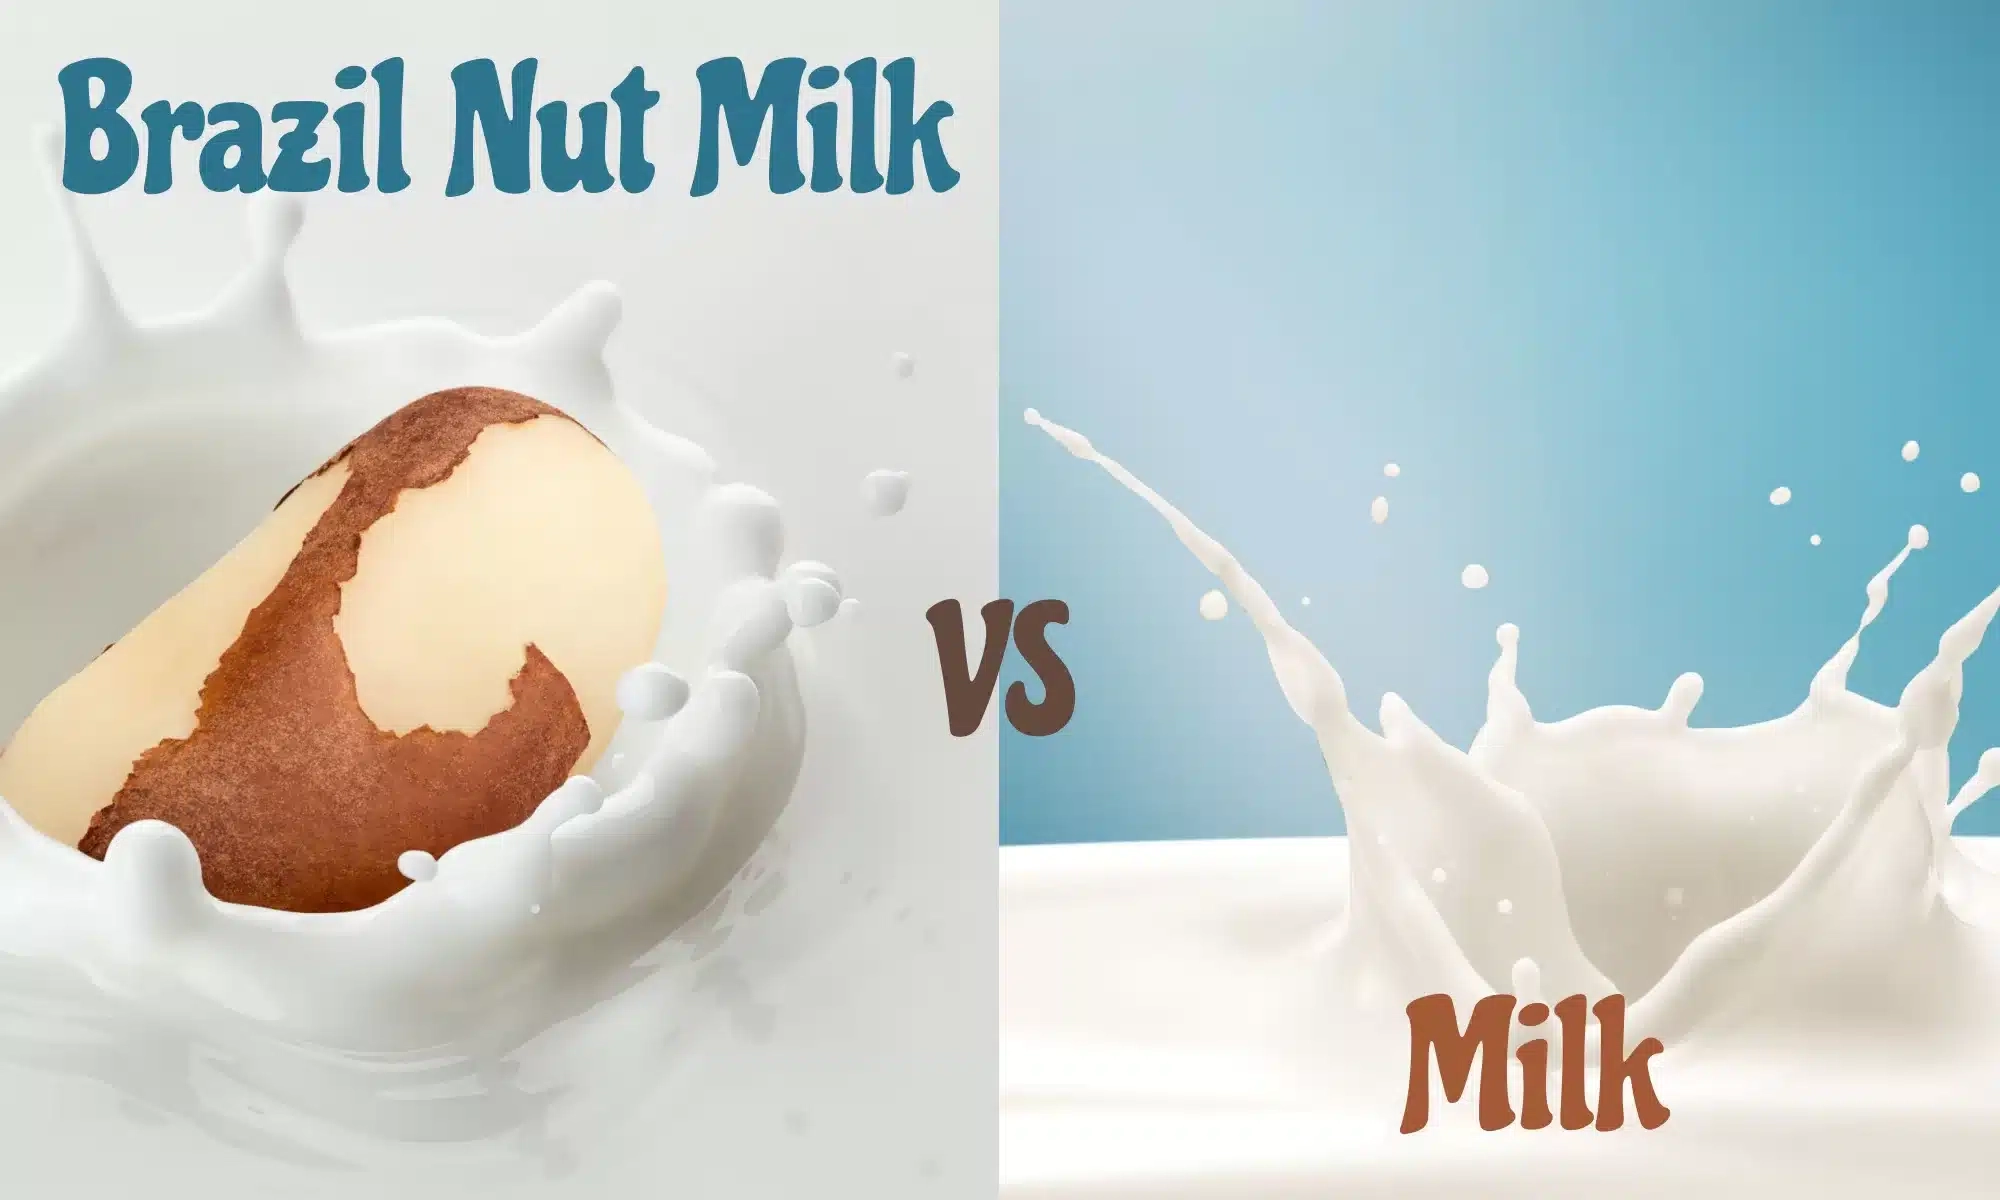 Brazil Nut Milk vs Milk: Which Is Better?